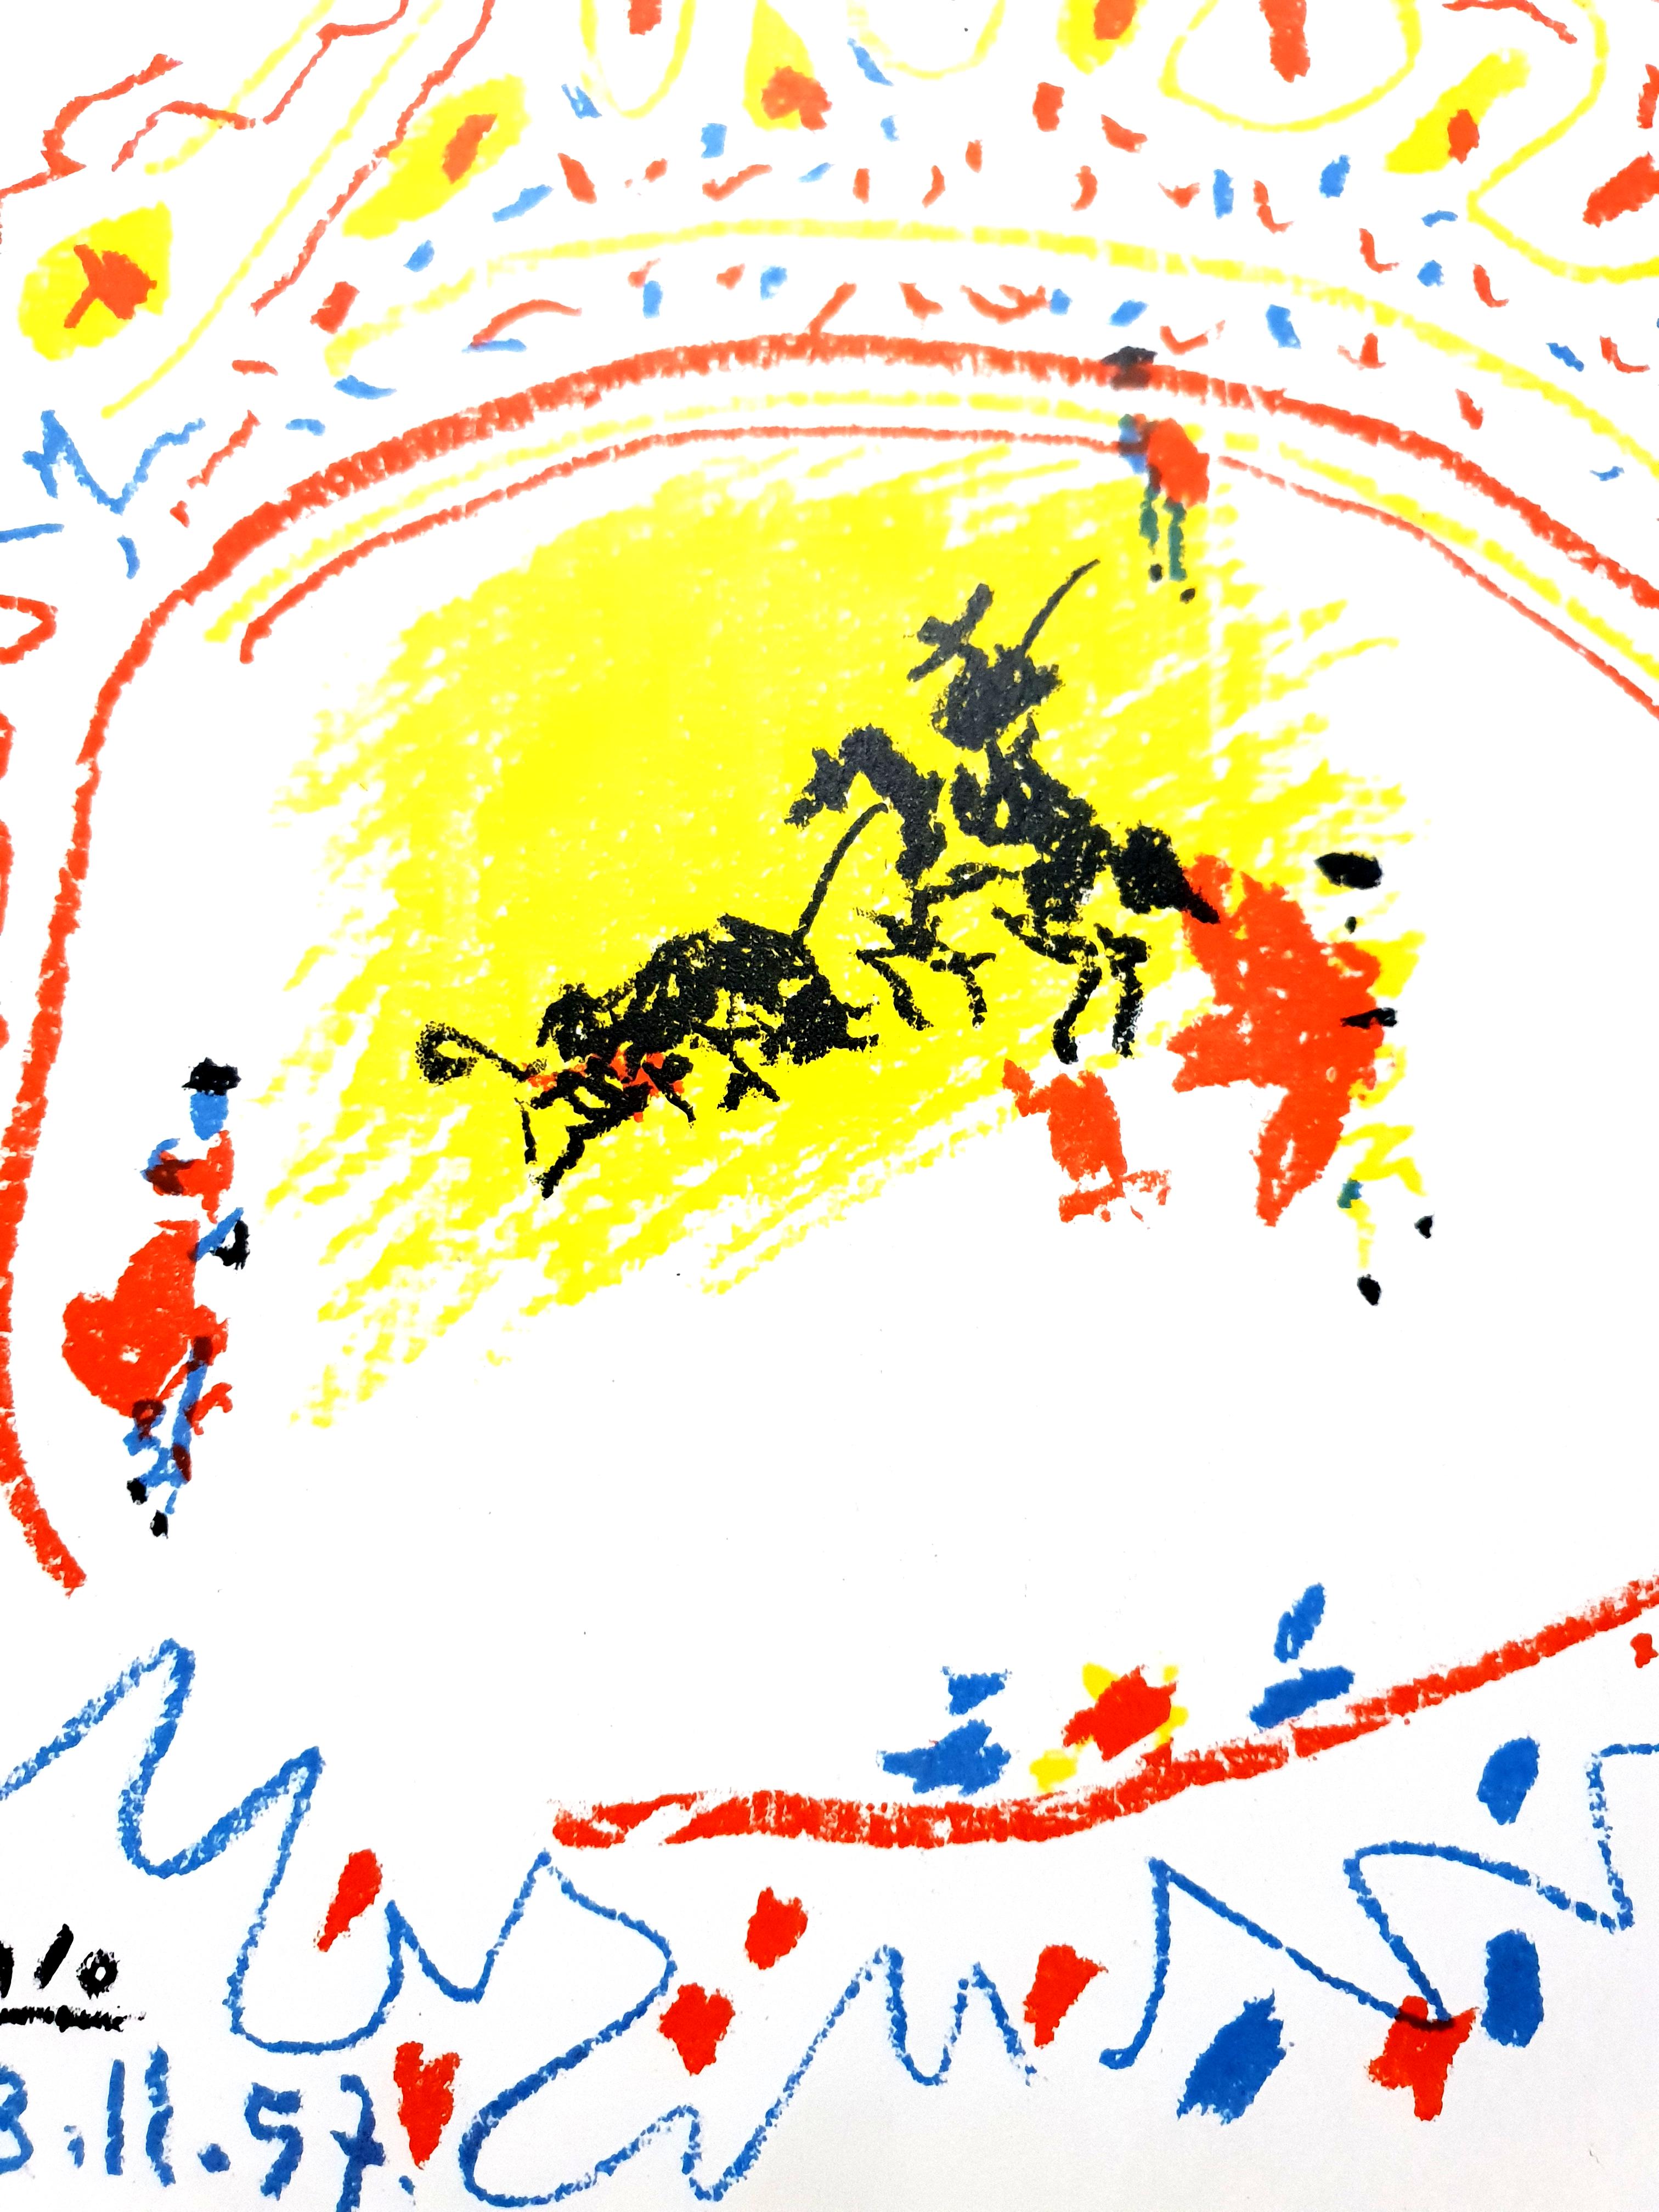 Pablo Picasso - Original Lithograph
La Petite Corrida (The Small Bullfight)
1958
Edition of 2000, unsigned
Published in the journal XXe Siecle
Dimensions: 32 x 25 cm 
Edition: G. di San Lazzaro.

Catalogue raisonne: Mourlot 302
Pablo